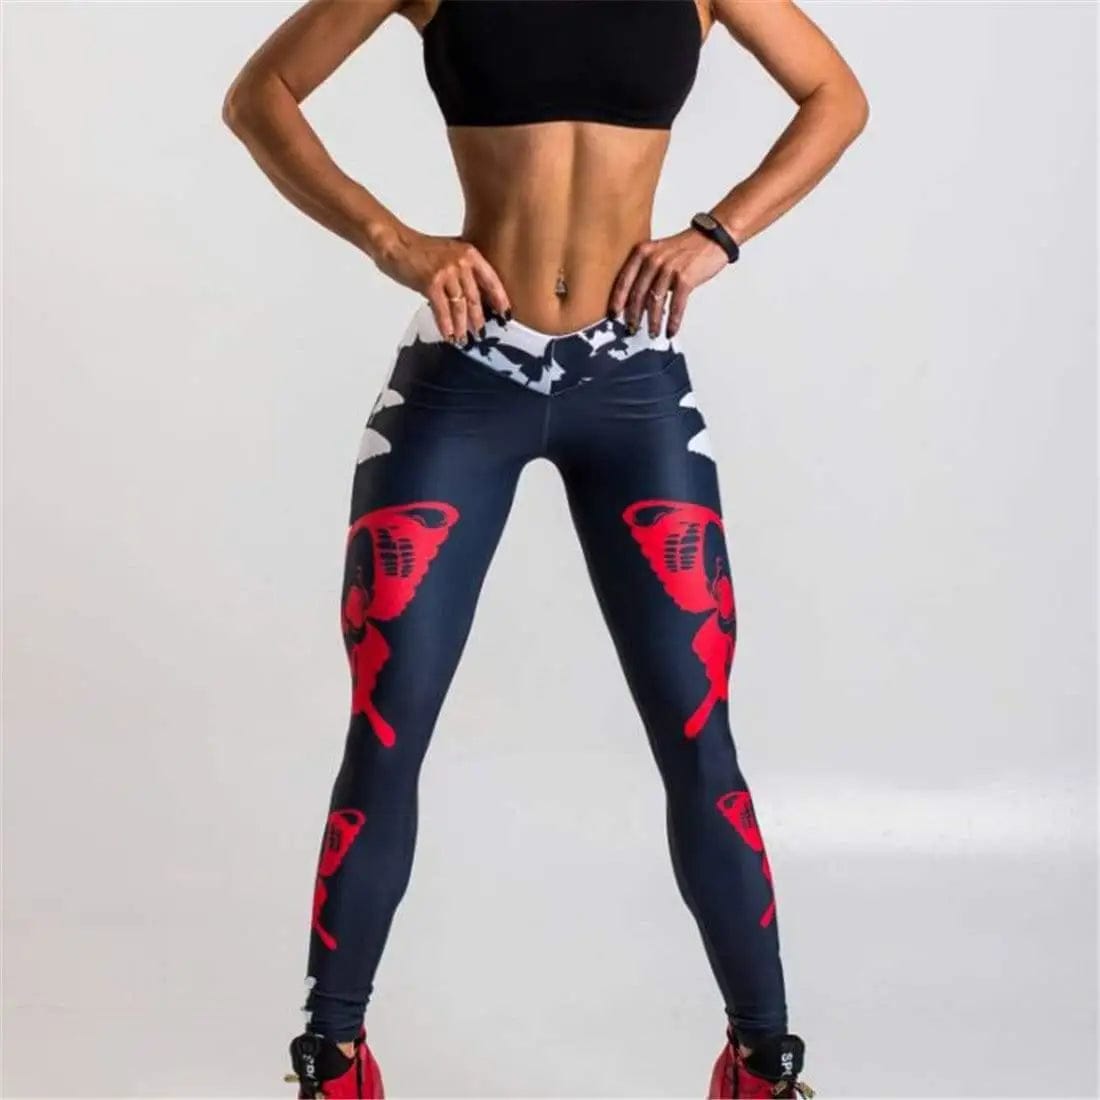 LOVEMI  Leggings Color / XS Lovemi -  Red Butterfly Print Leggings Women's Sports Yoga Pants